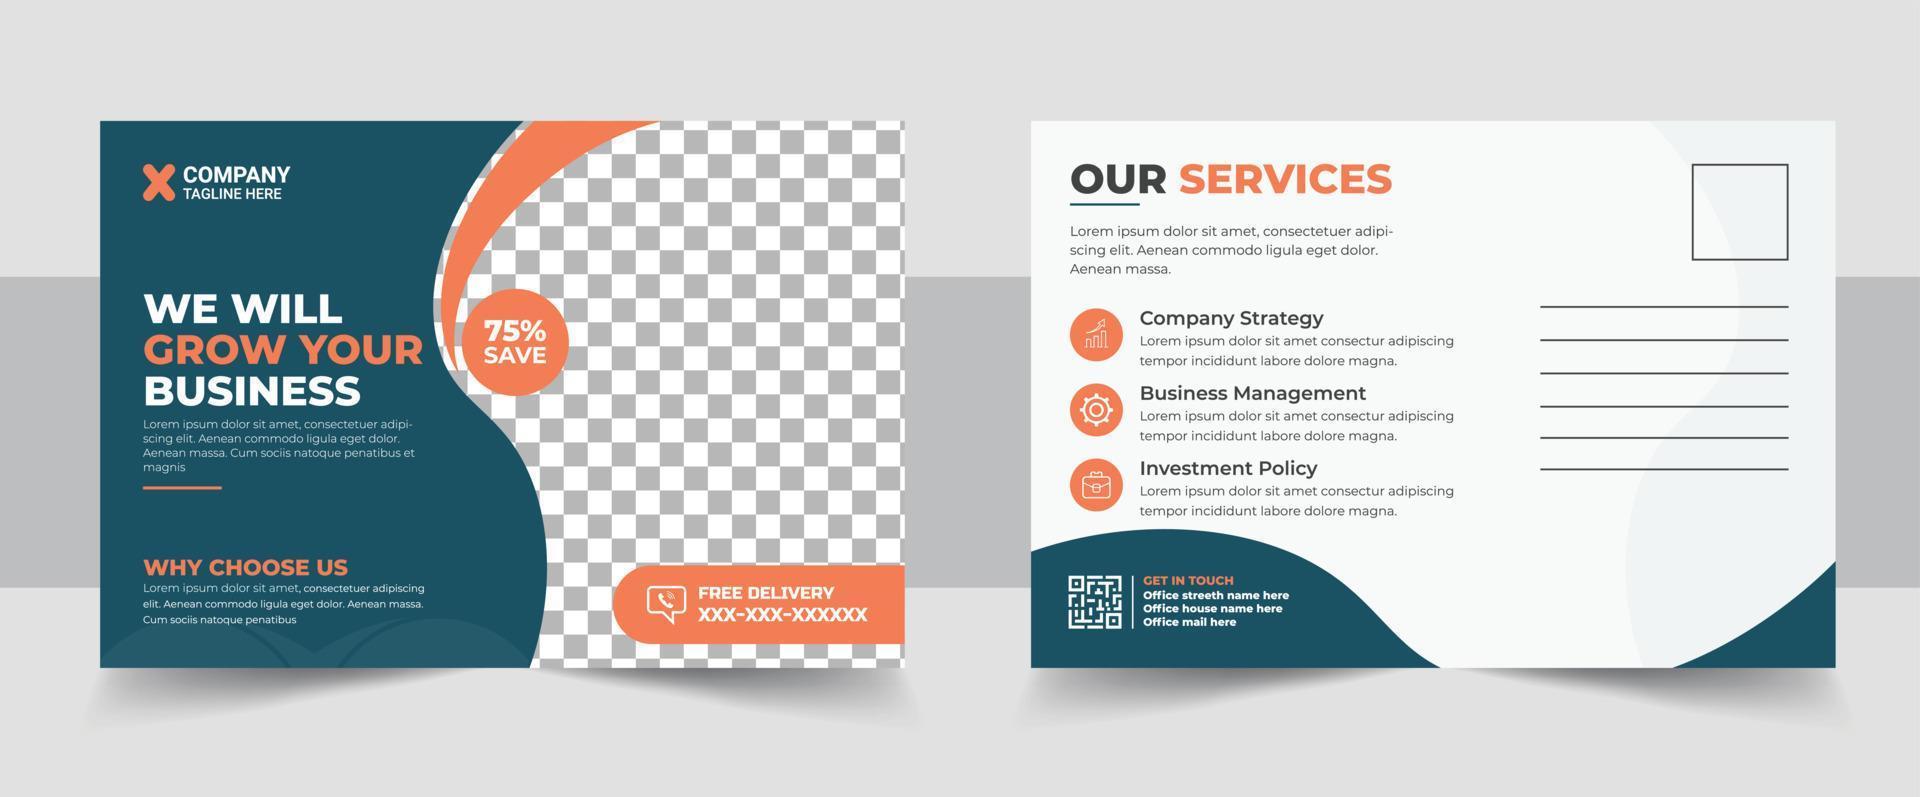 Corporate postcard design template. amazing and modern postcard design. stylish corporate postcard design. vector